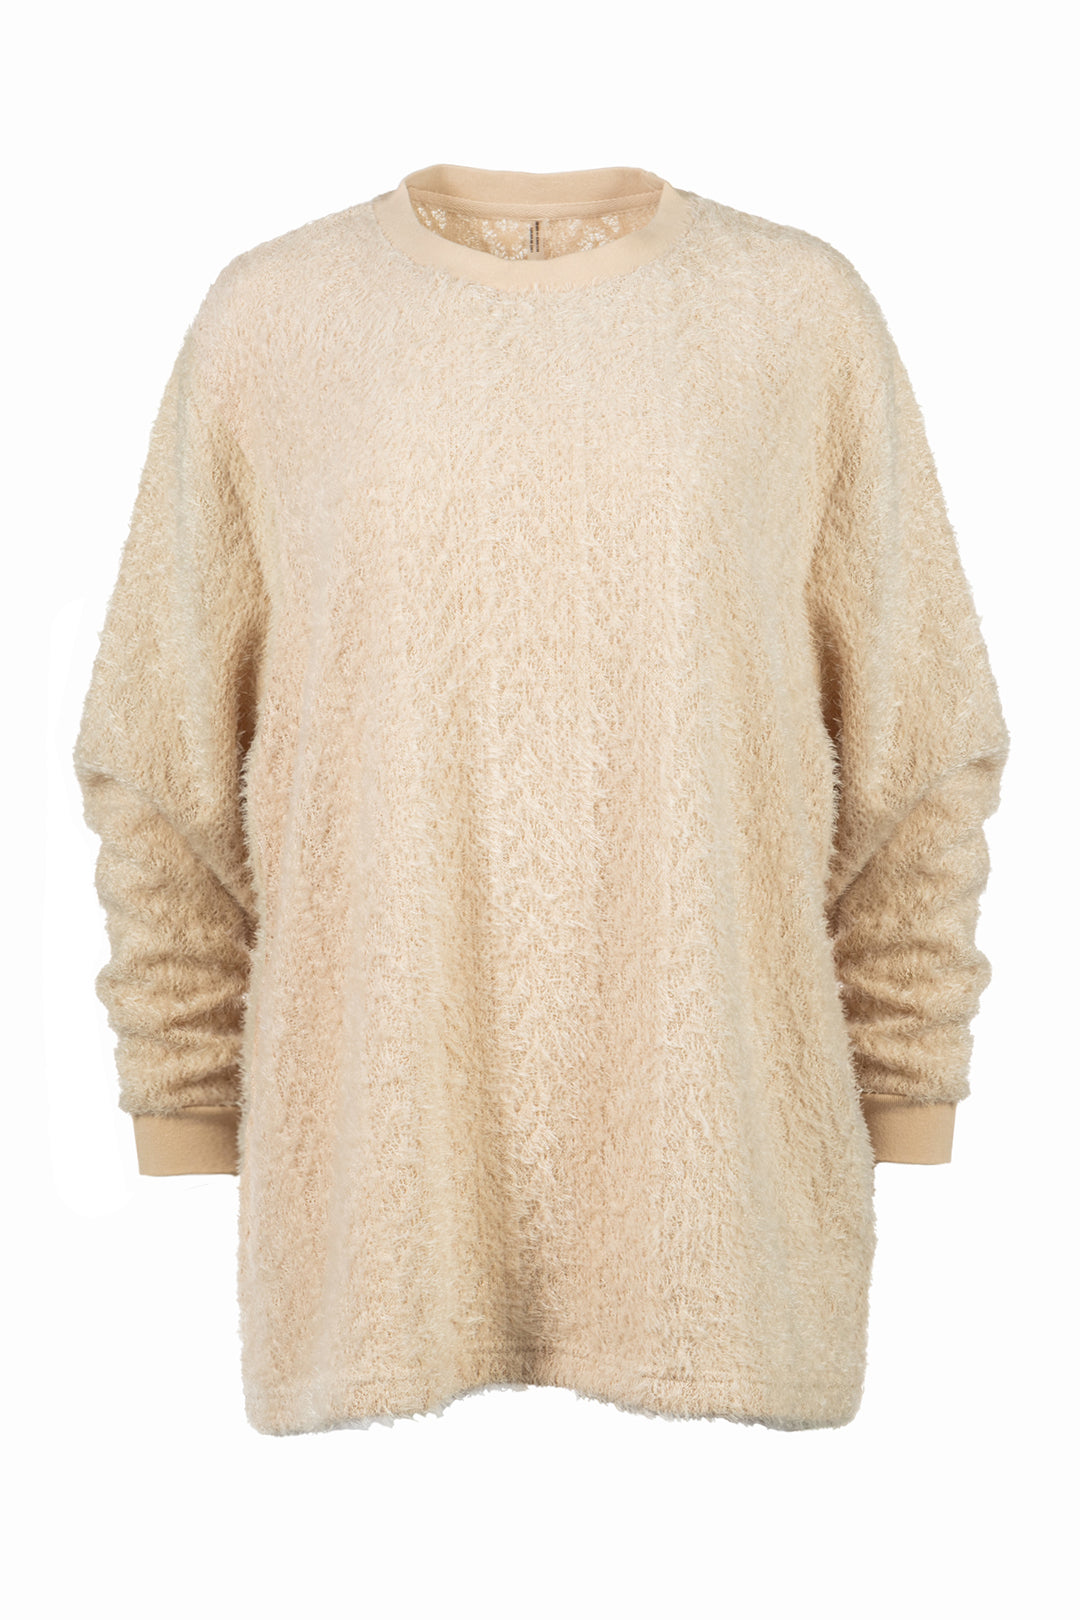 Beige textured fuzzy sweater | Melianna